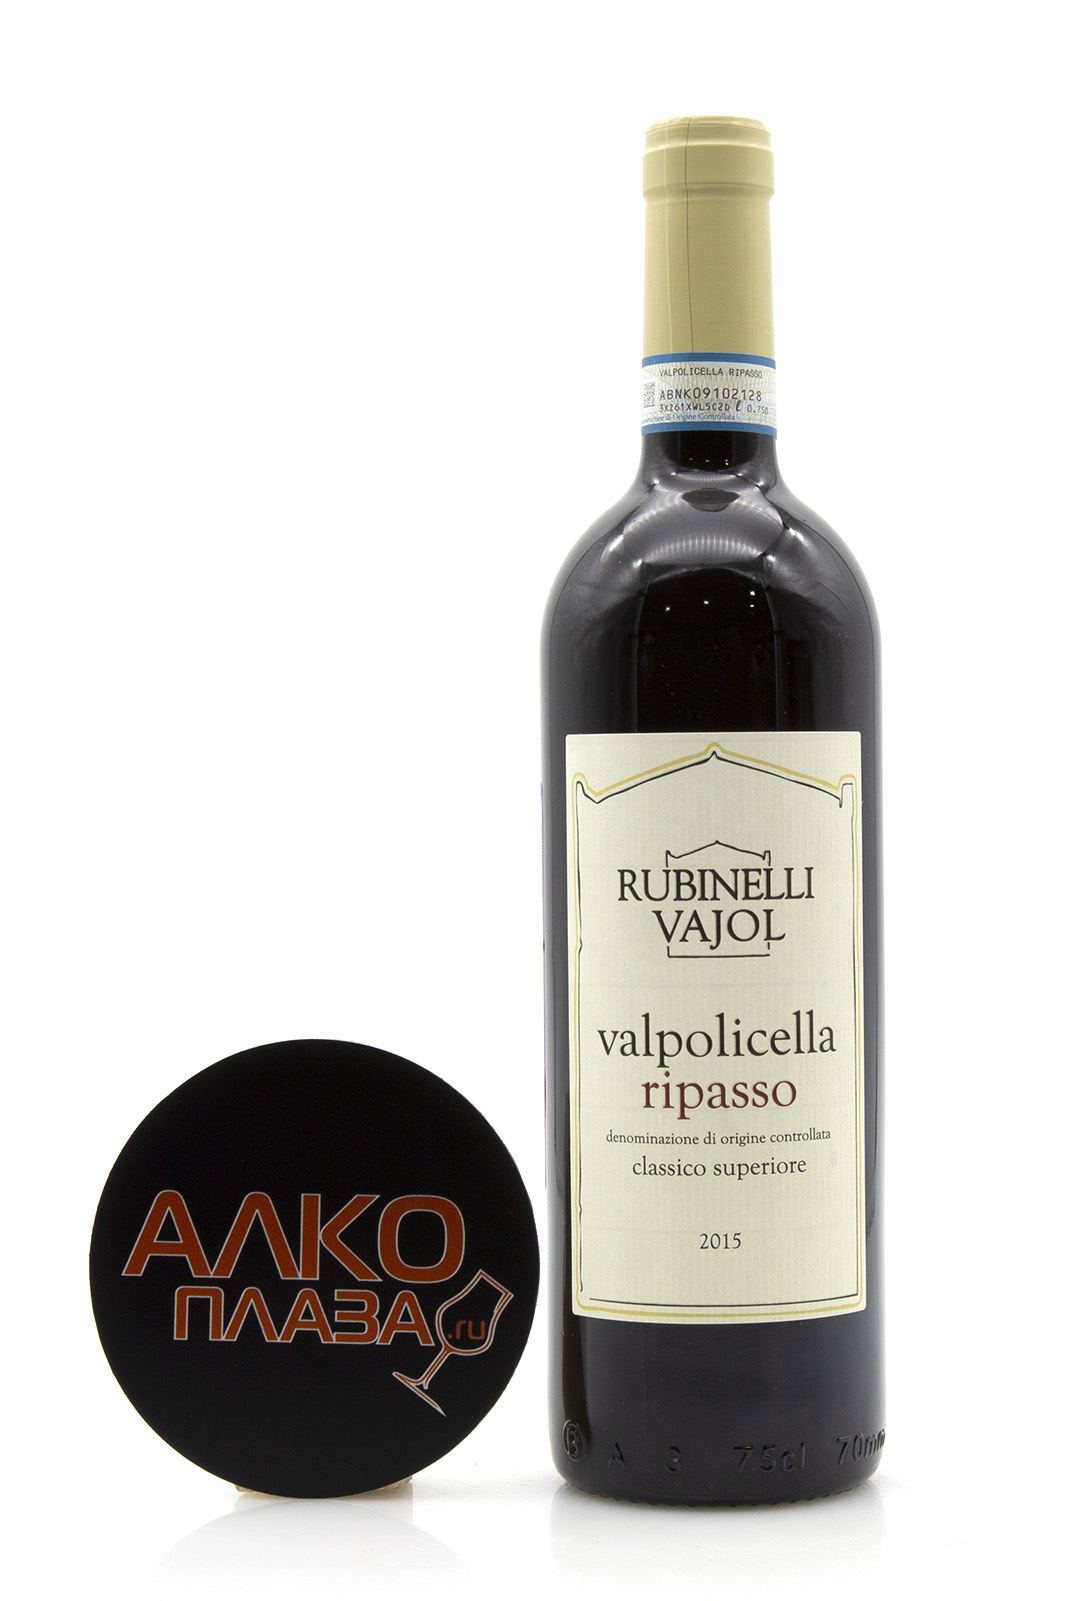 Rubinelli Vajol Valpolicella Ripasso Сlassico Superiore DOC - вино Рубинелли Вайоль Вальполичелла Рипассо Классико Супериоре 0.75 л красное сухое